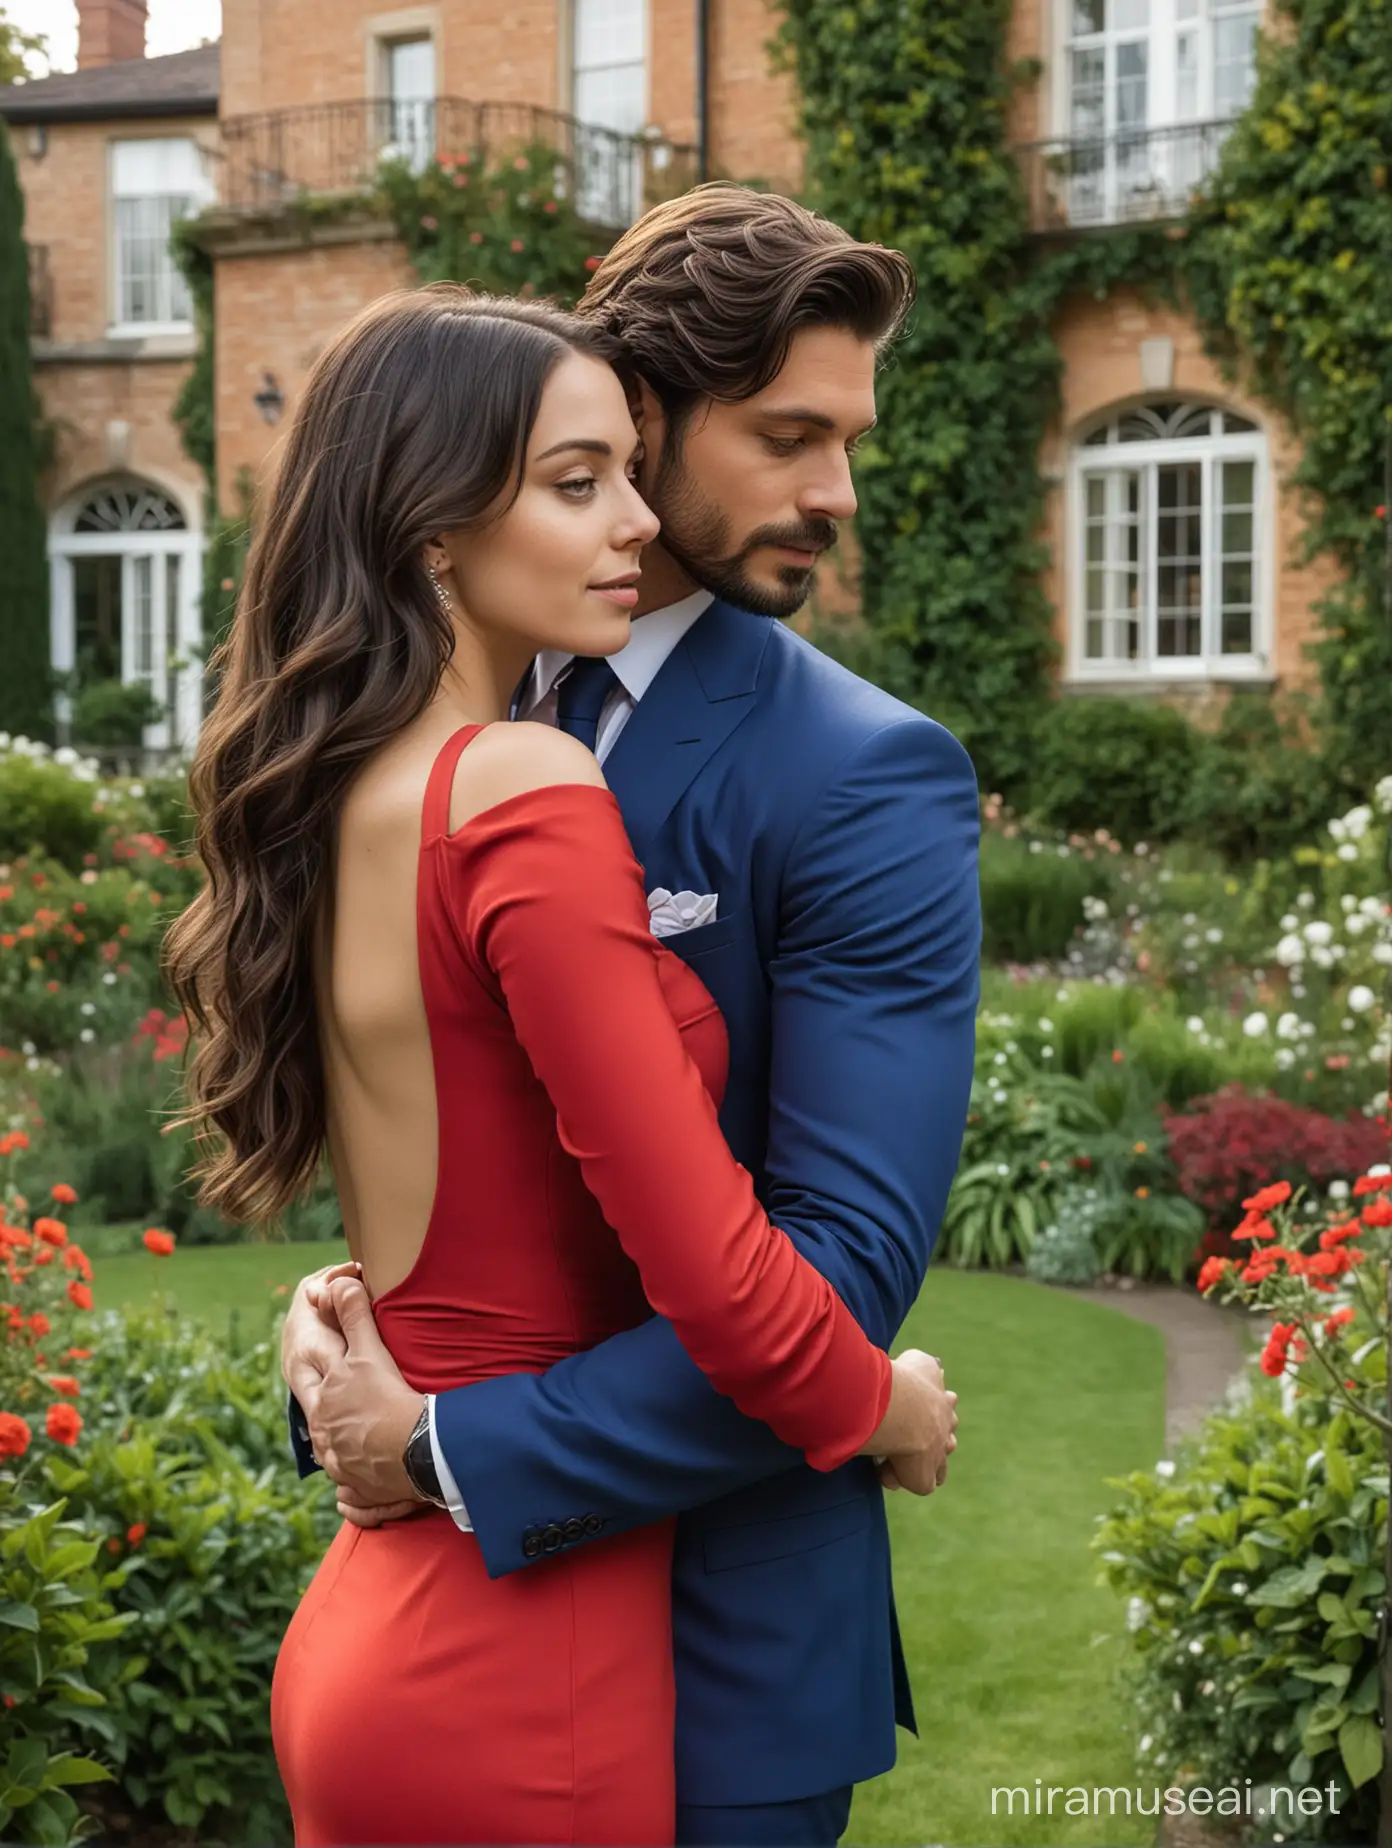 Elegant Couple Embracing in Mansion Garden